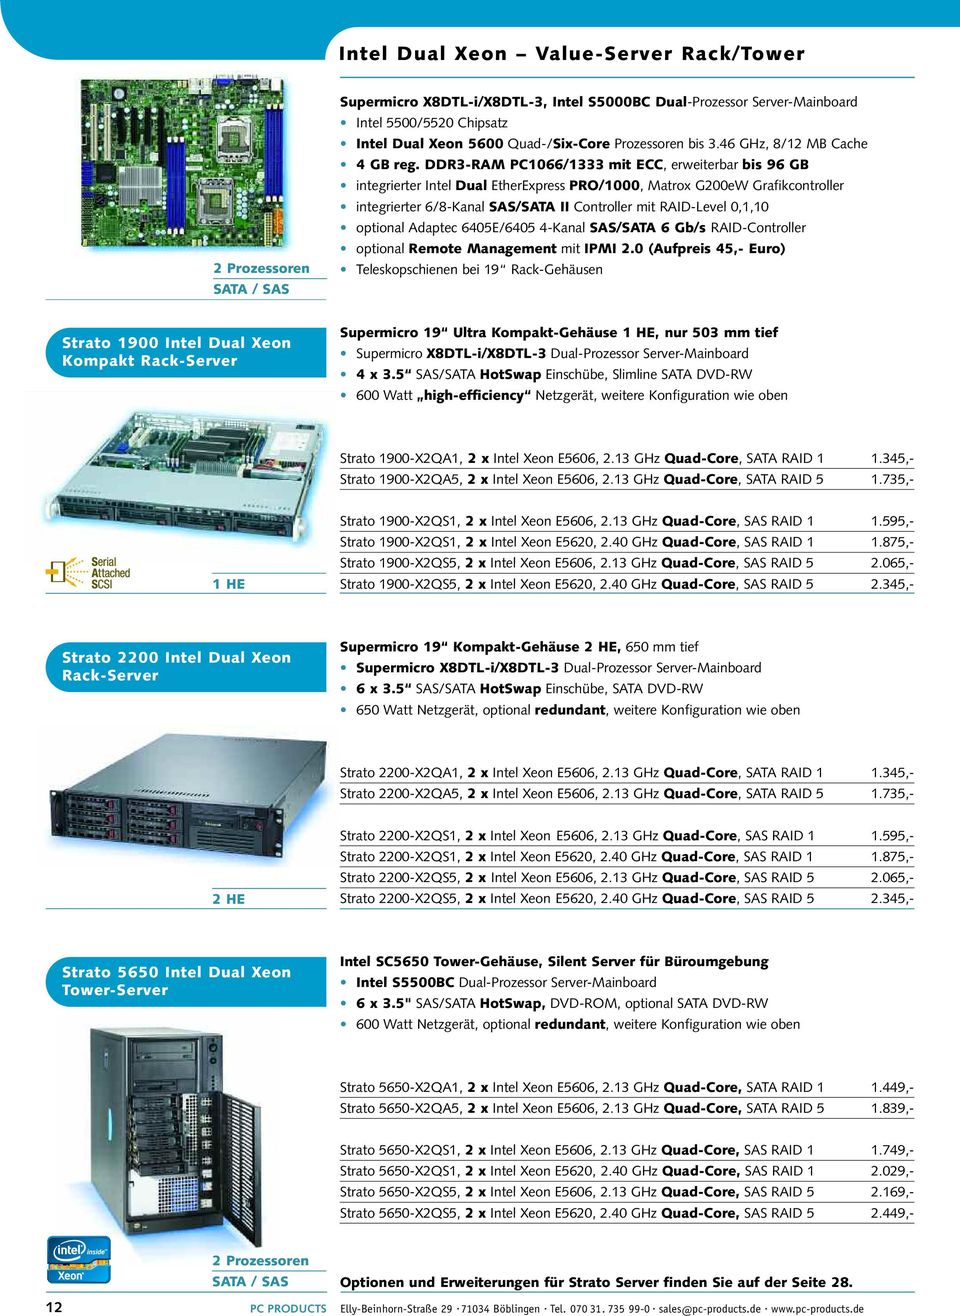 DDR3-RAM PC1066/1333 mit ECC, erweiterbar bis 96 GB integrierter Intel Dual EtherExpress PRO/1000, Matrox G200eW Grafikcontroller integrierter 6/8-Kanal SAS/SATA II Controller mit RAID-Level 0,1,10